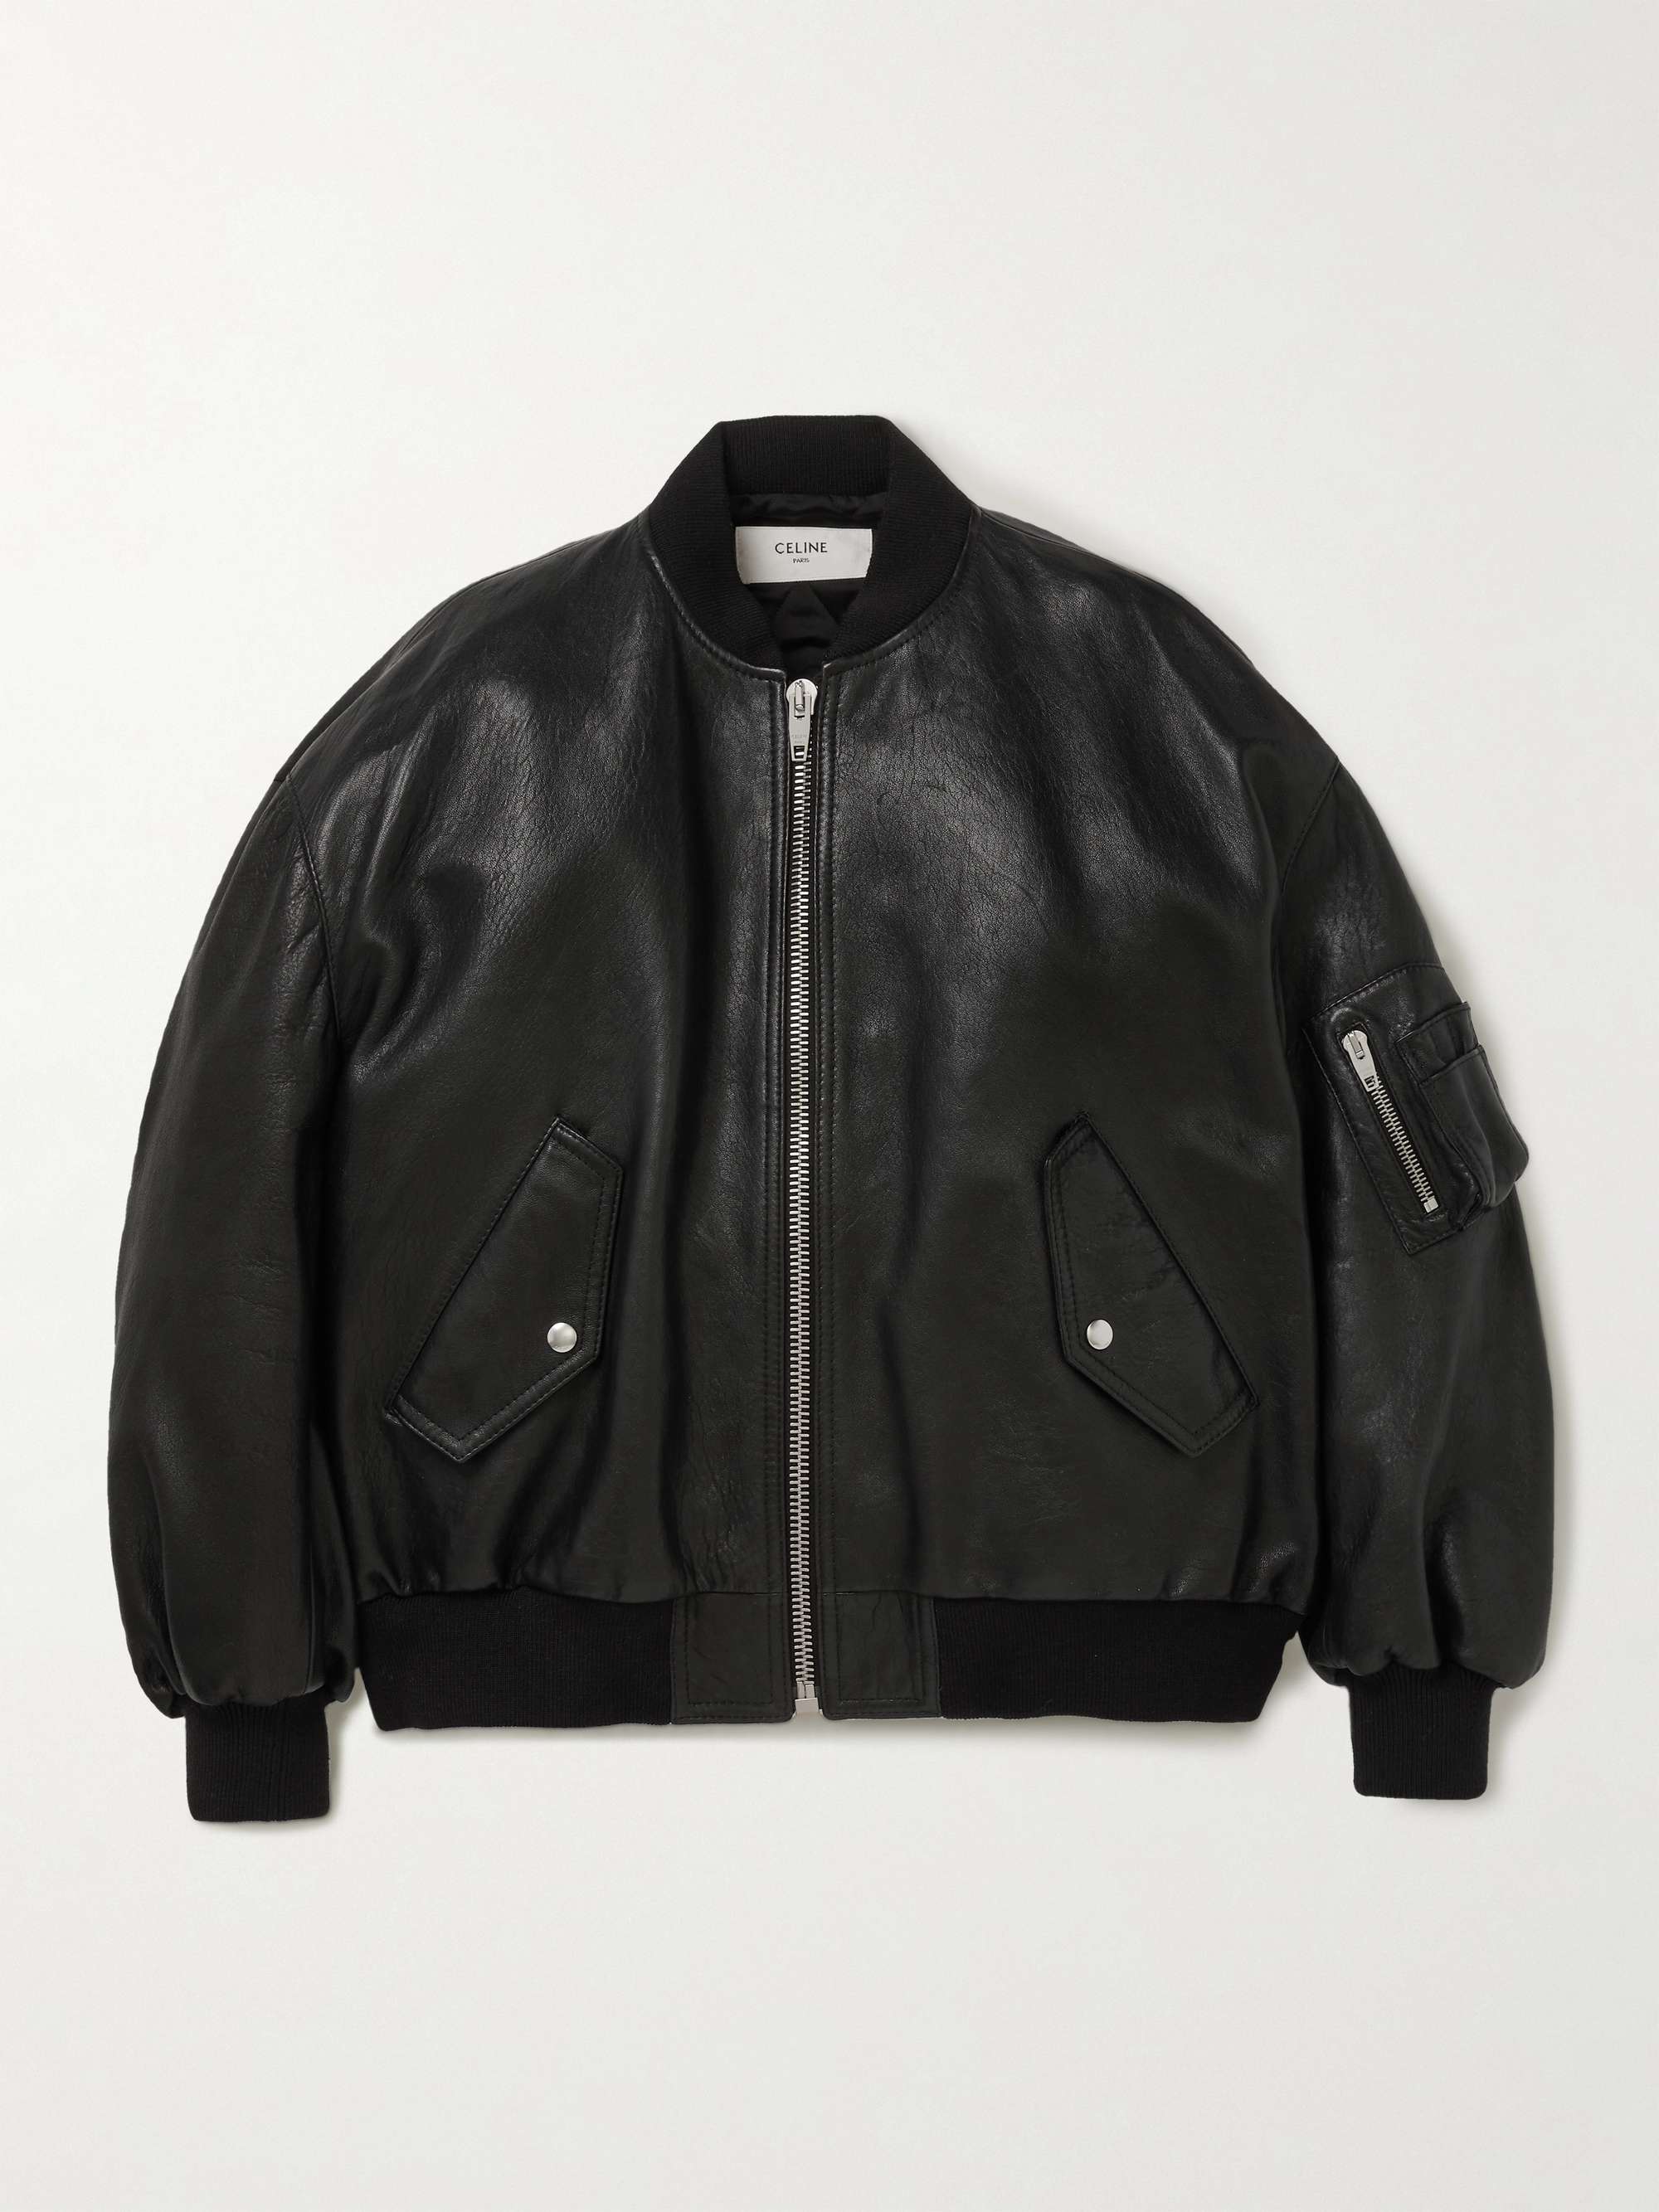 CELINE HOMME Studded Logo-Print Leather Bomber Jacket for Men | MR PORTER